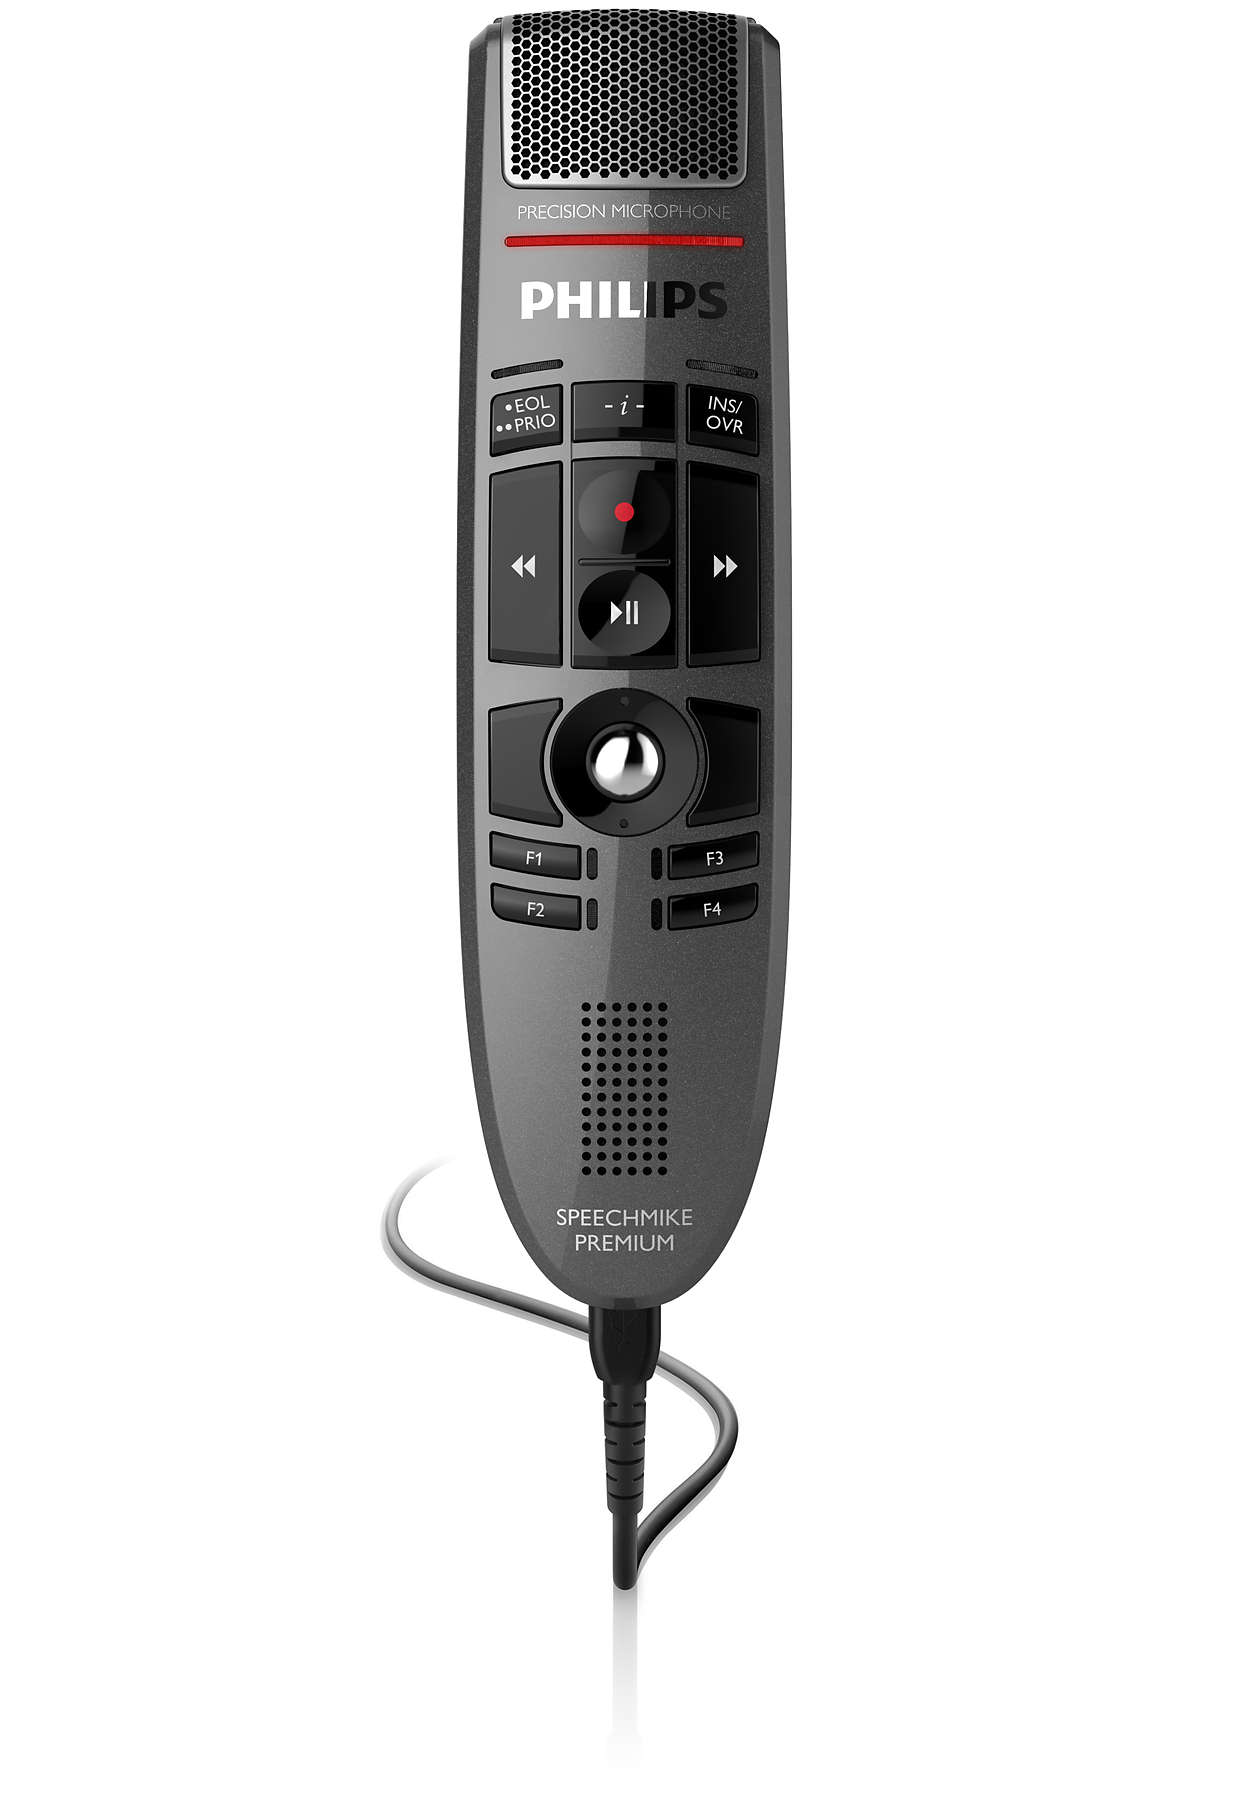 Philips SpeechMike Premium - Recording Solutions - Hardware